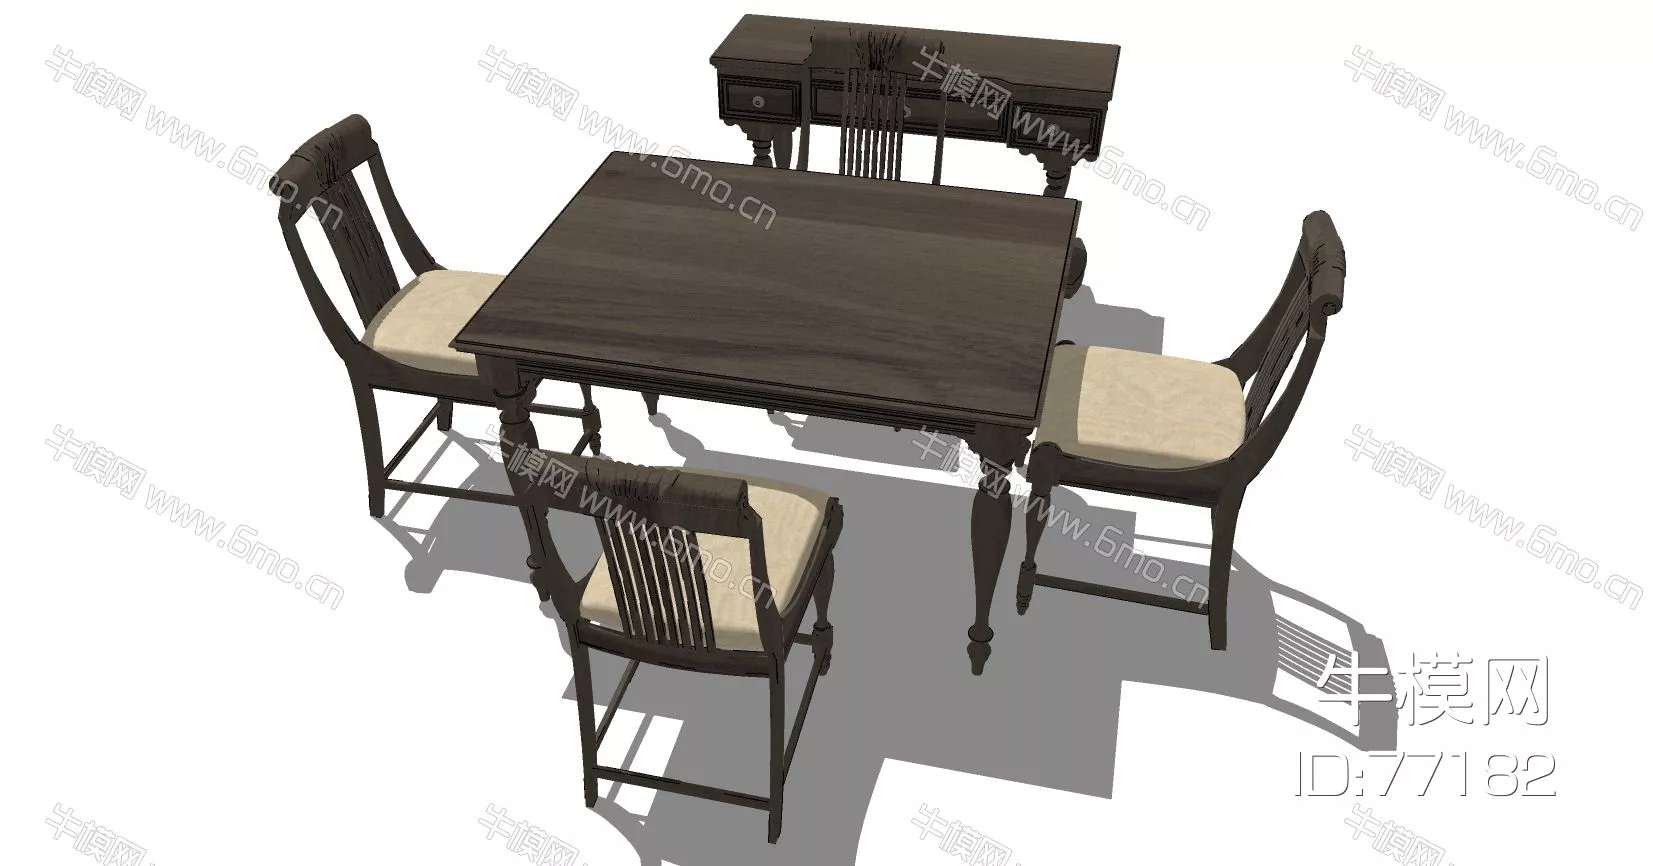 AMERICAN DINING TABLE SET - SKETCHUP 3D MODEL - ENSCAPE - 77182